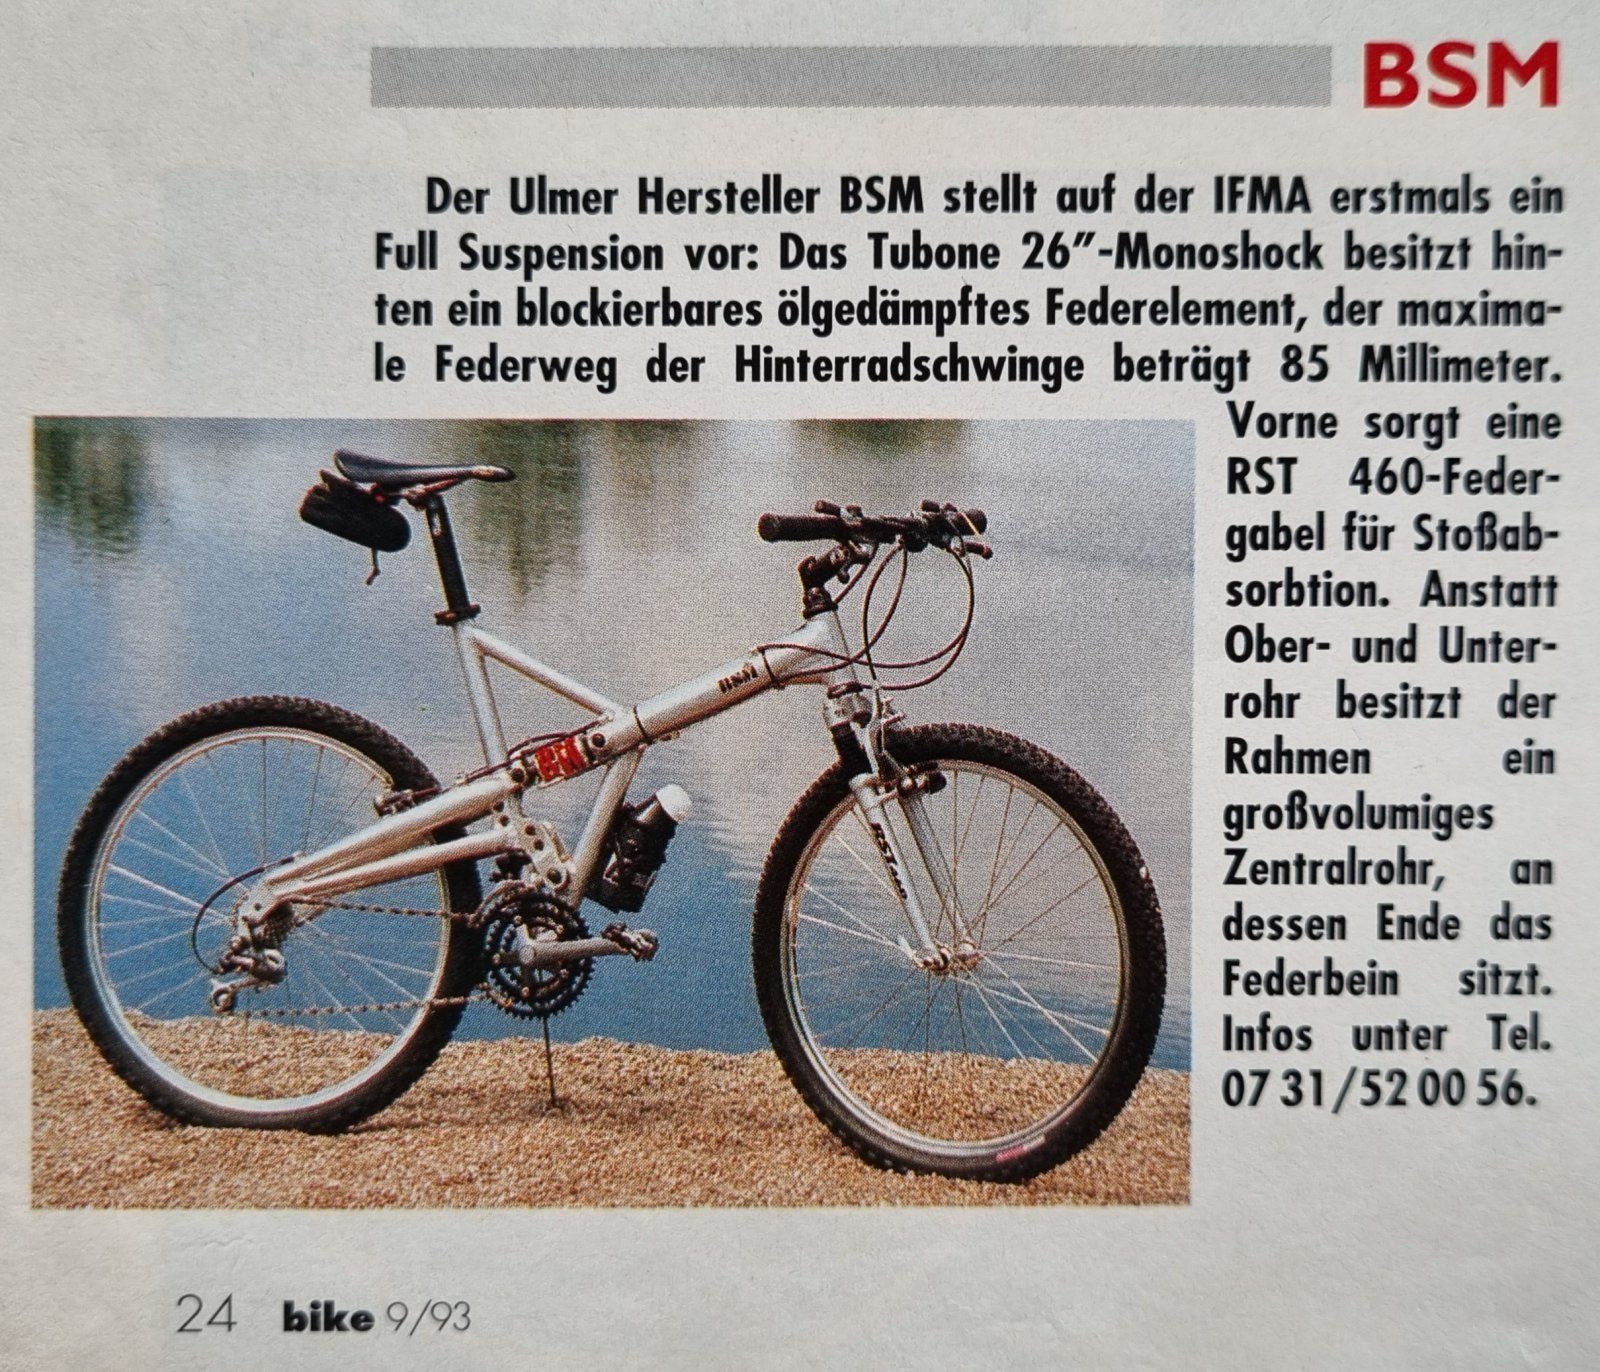 BSM Tubone 26 Monoshock aus Bike 1993 09.jpg